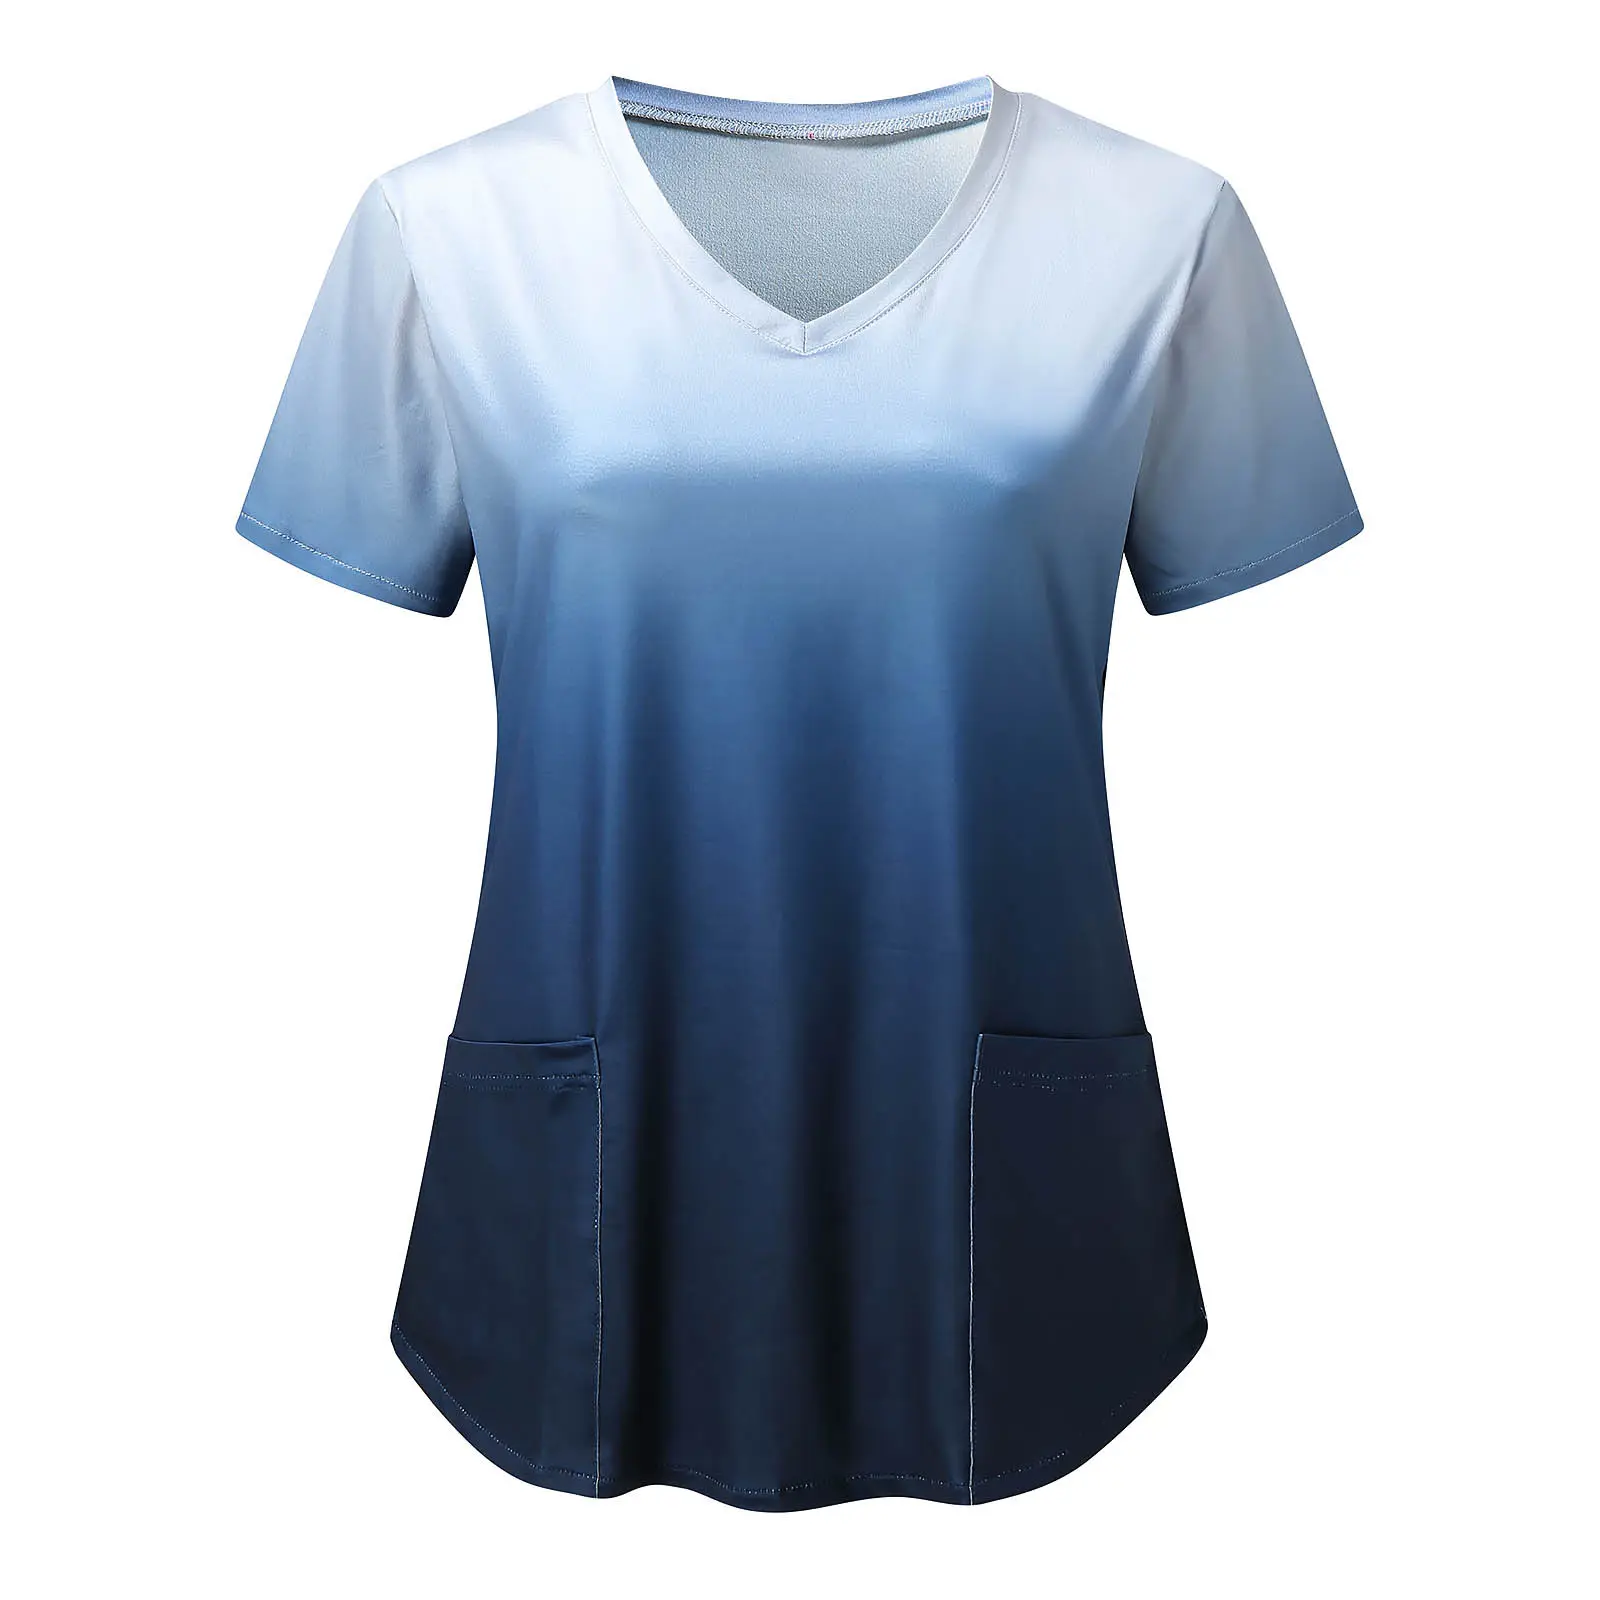 Scrubs Camisa Top Para As Mulheres V-Neck Trabalho Blusa Camisa Chemise Dentista Uniforme Enfermagem Manga Curta Saúde Feminina